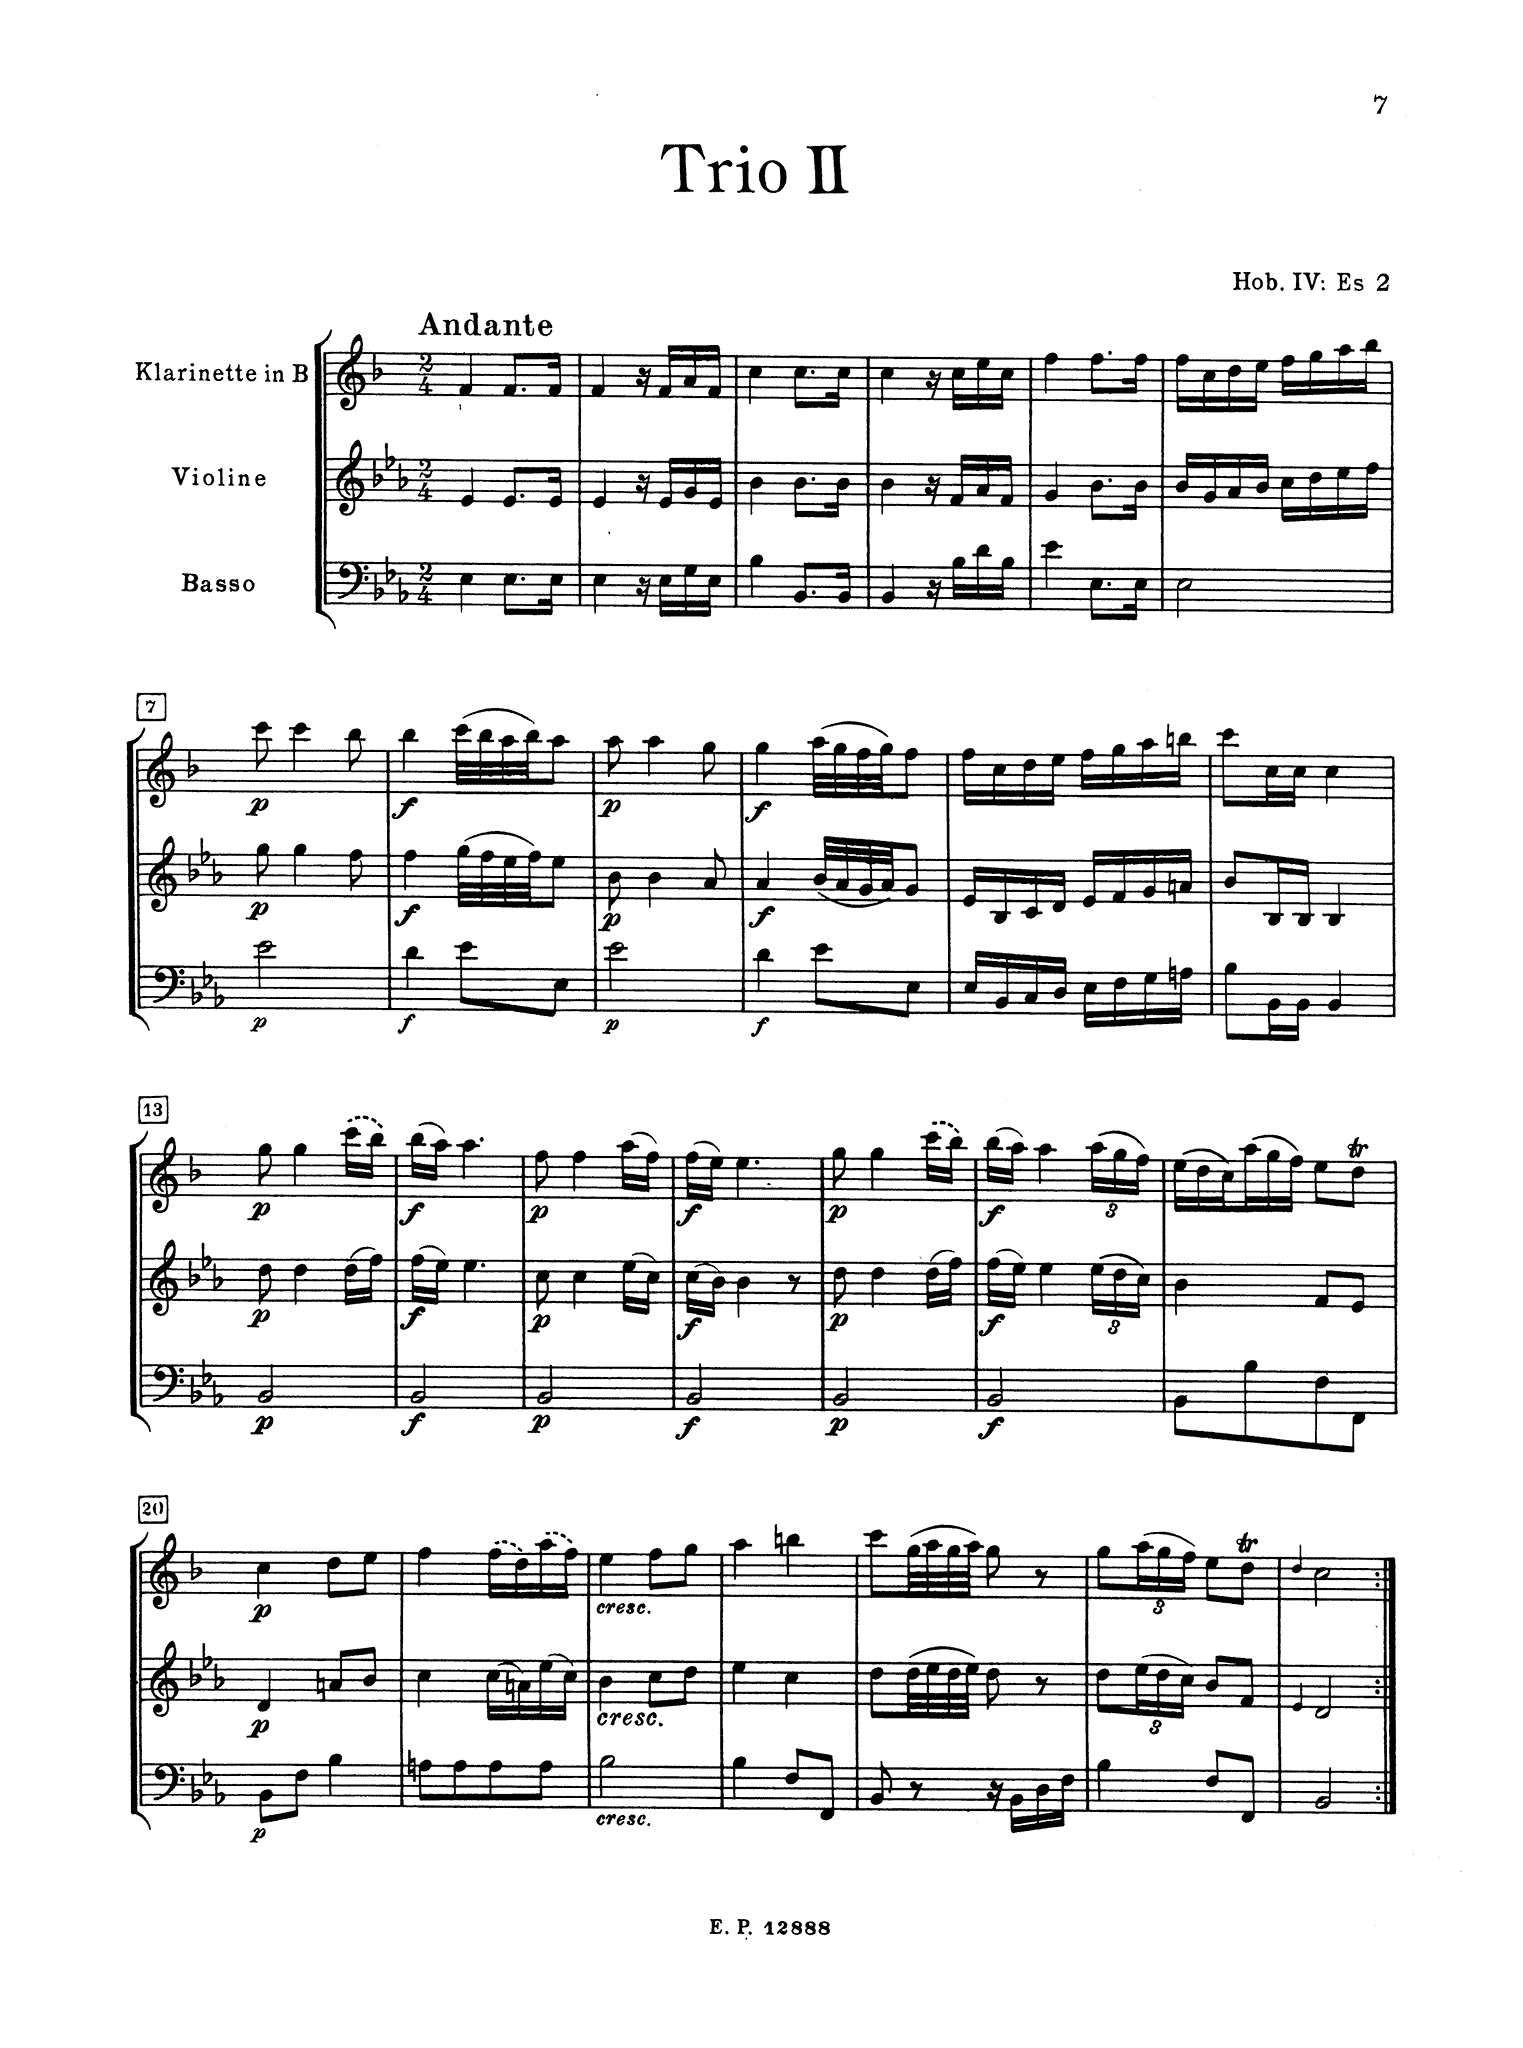 Haydn Clarinet Trio in E-flat Major, Hob. IV: Es2 - Movement 1